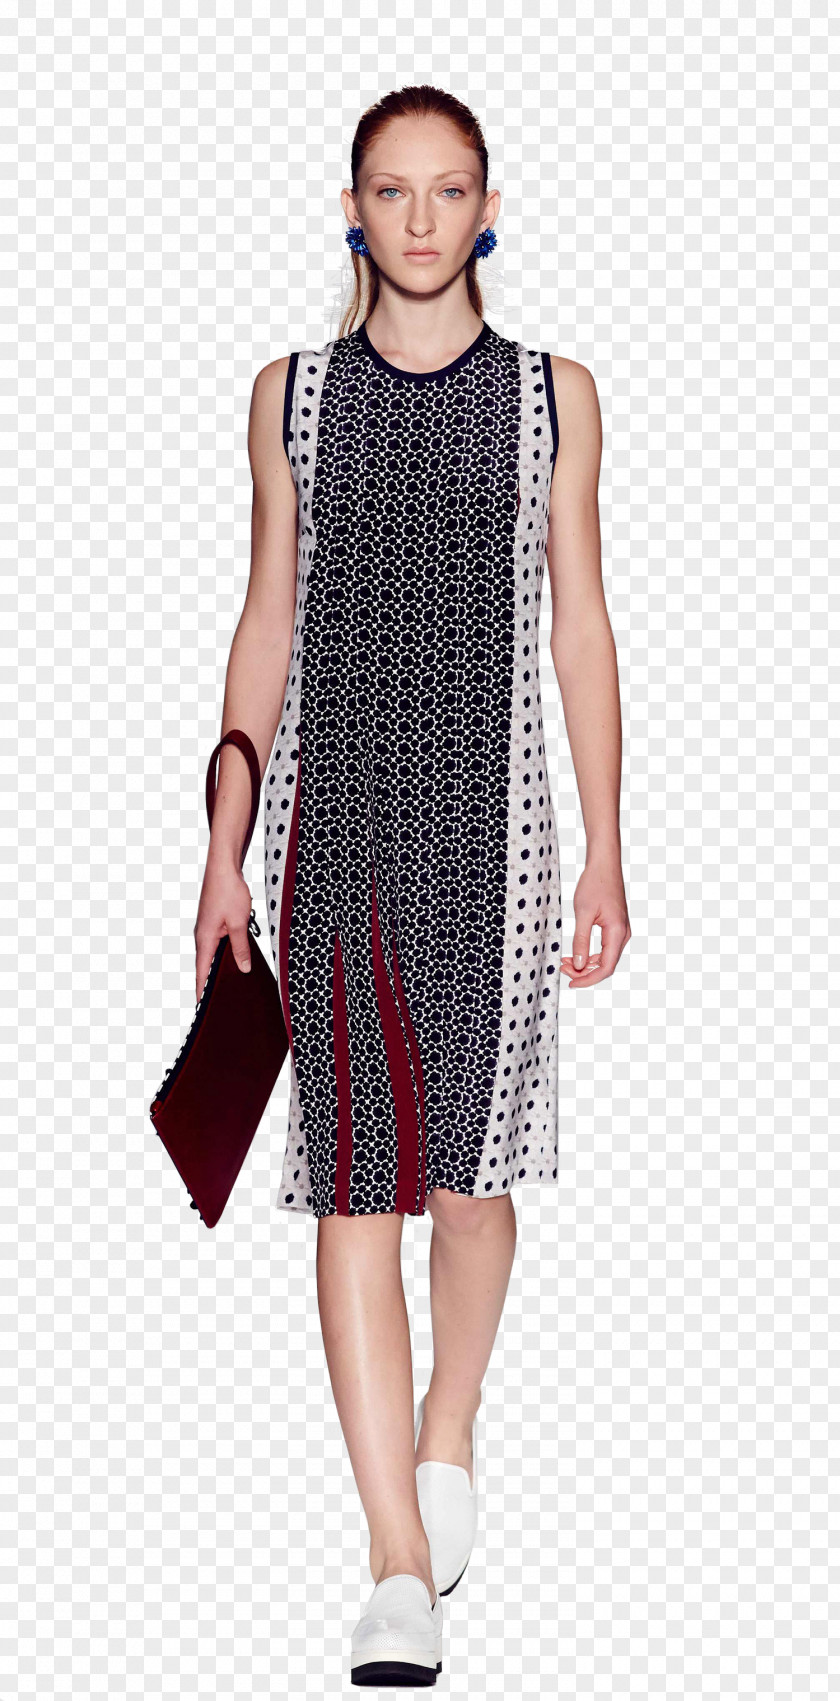 Silk Cloth Clothing Dress Fashion Polka Dot Textile PNG